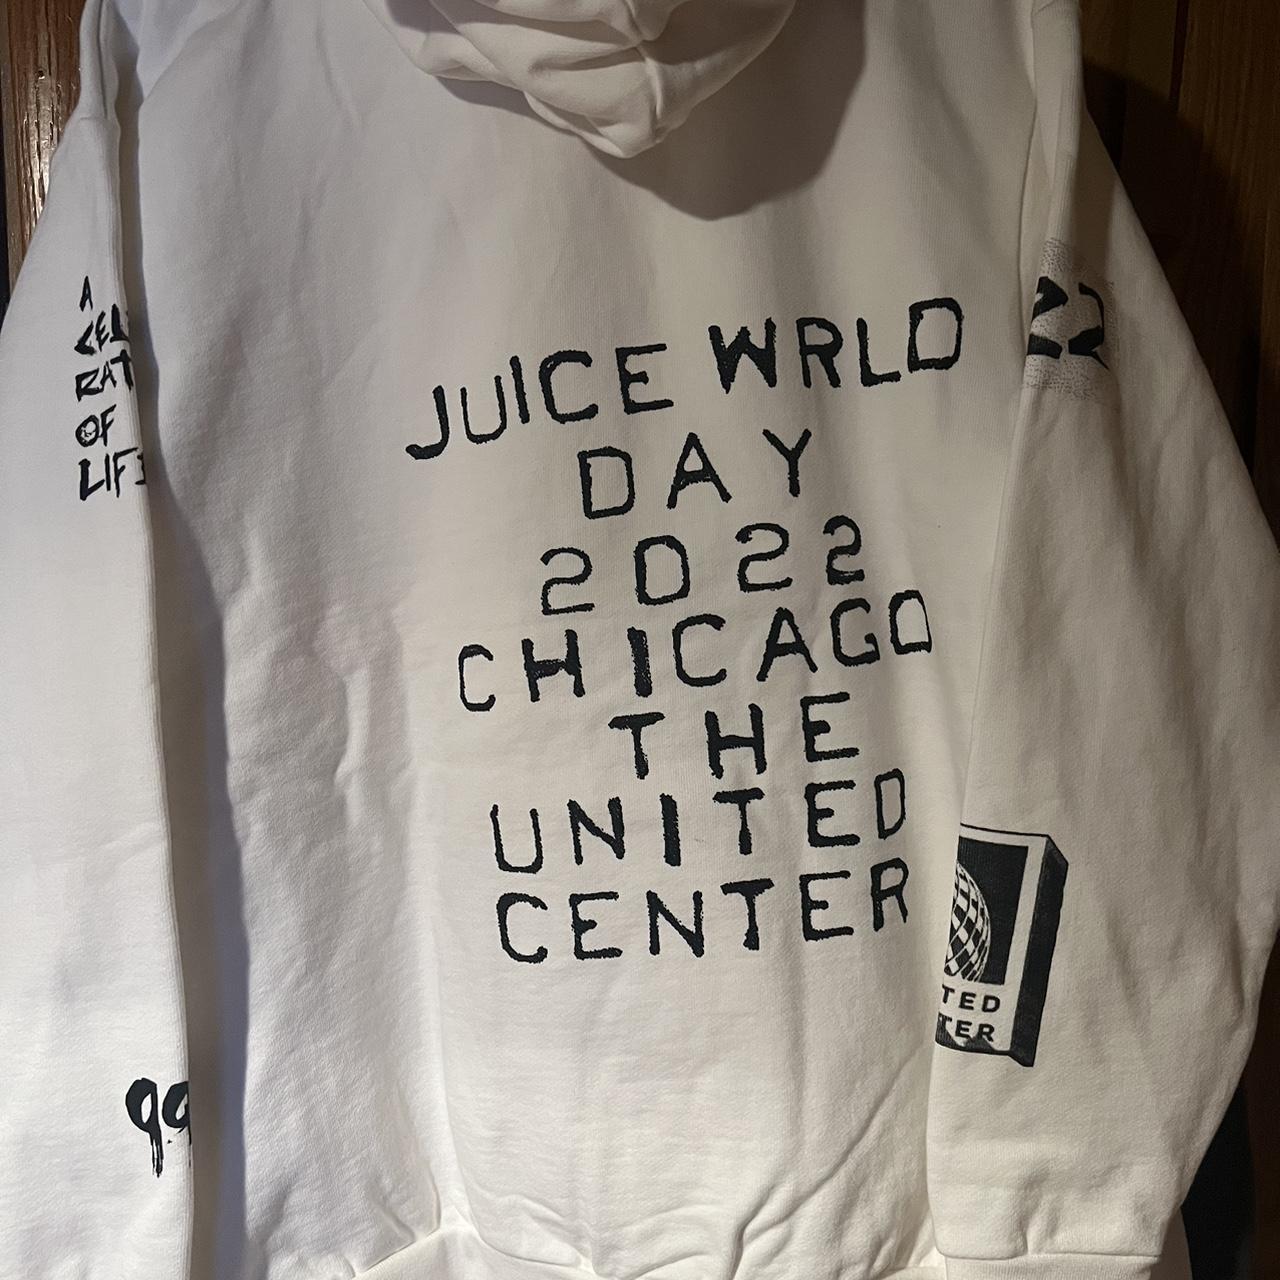 Juice WRLD Day 2022 Part 2 999 Club United Center...